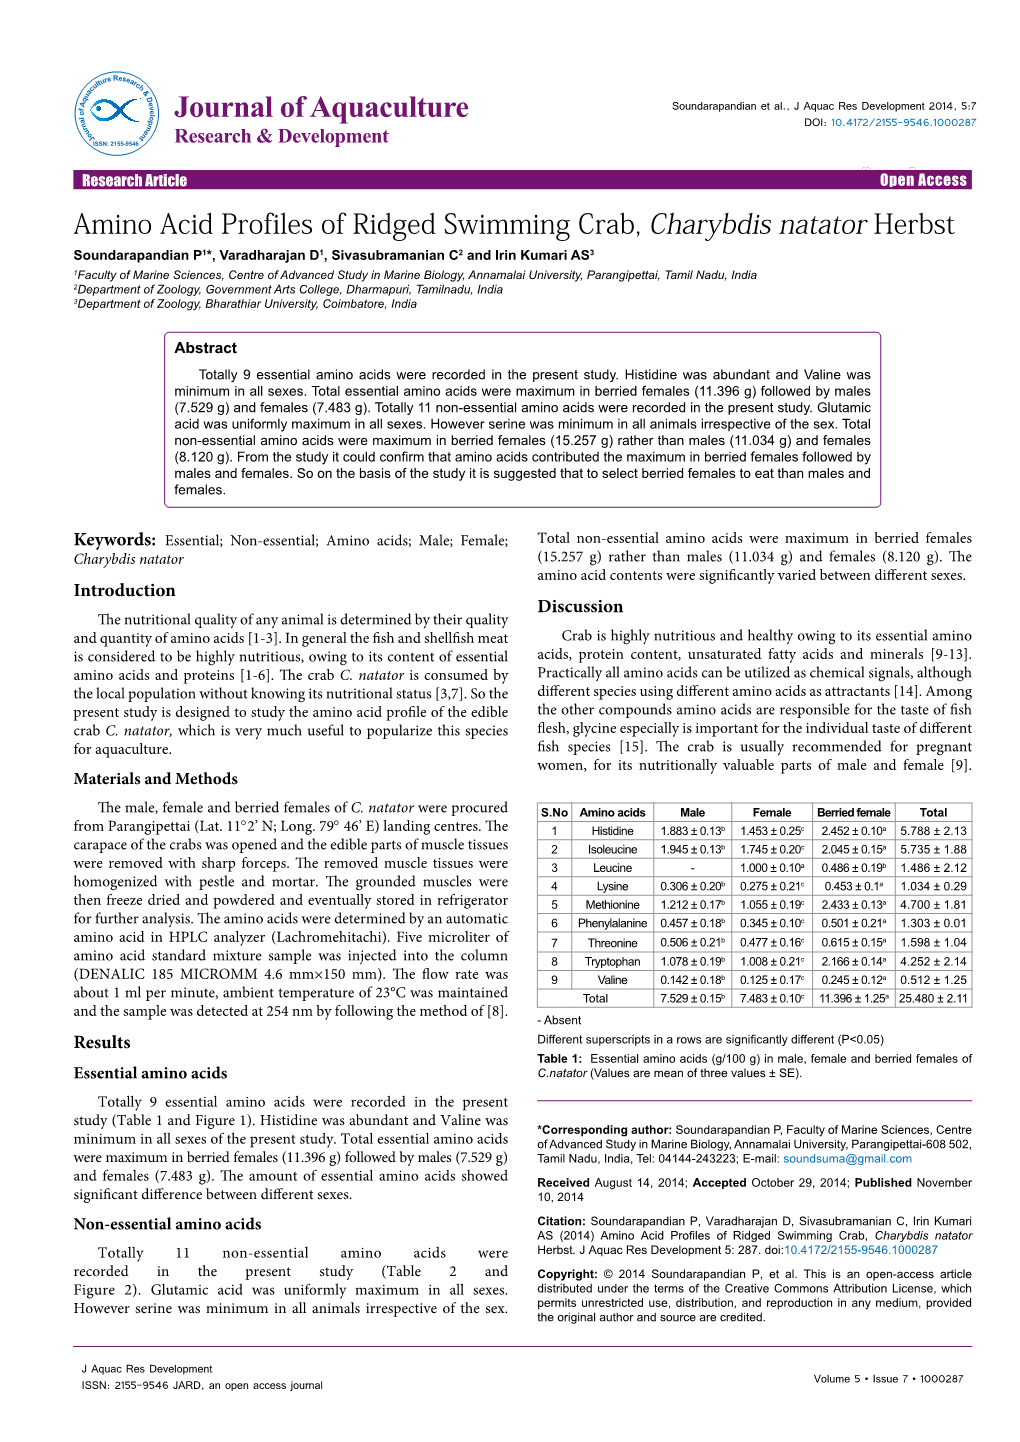 Amino Acid Profiles of Ridged Swimming Crab, Charybdis Natator